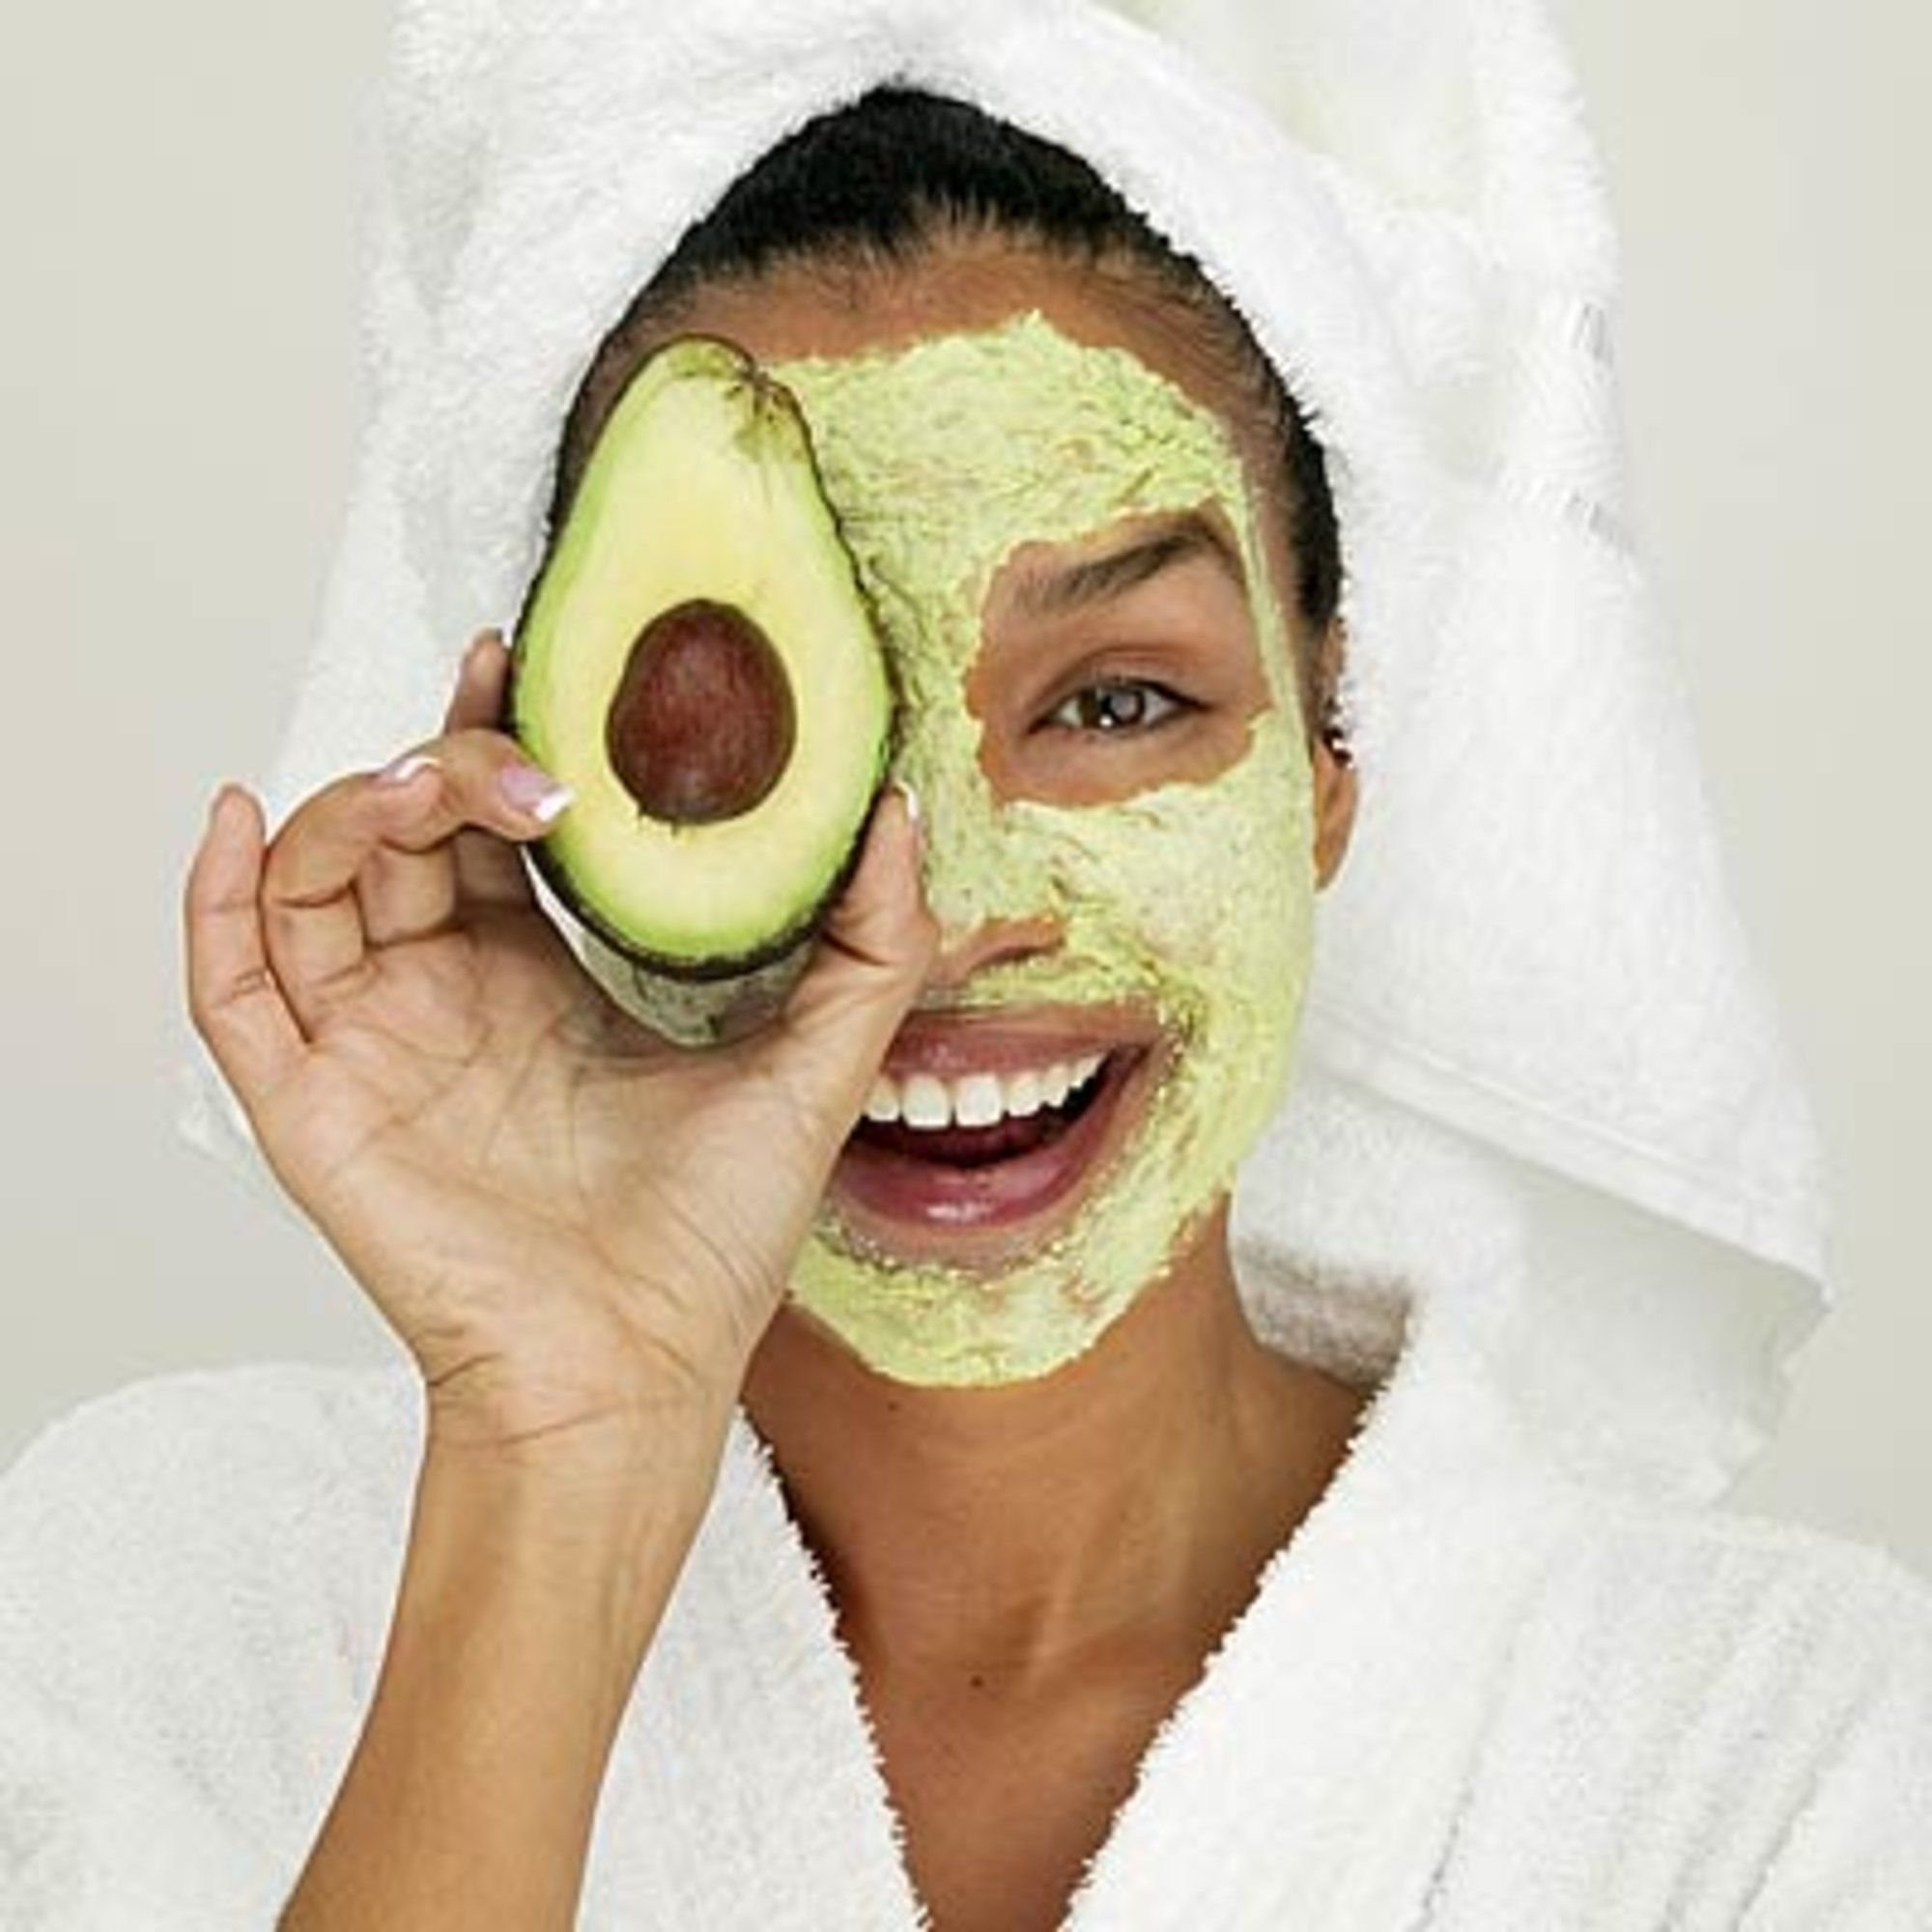 Маски для лица в домашних условиях 45. Avocado маска для лица. М̆̈ӑ̈с̆̈к̆̈й̈ д̆̈л̆̈я̆̈ л̆̈й̈ц̆̈ӑ̈. Майки лицо.